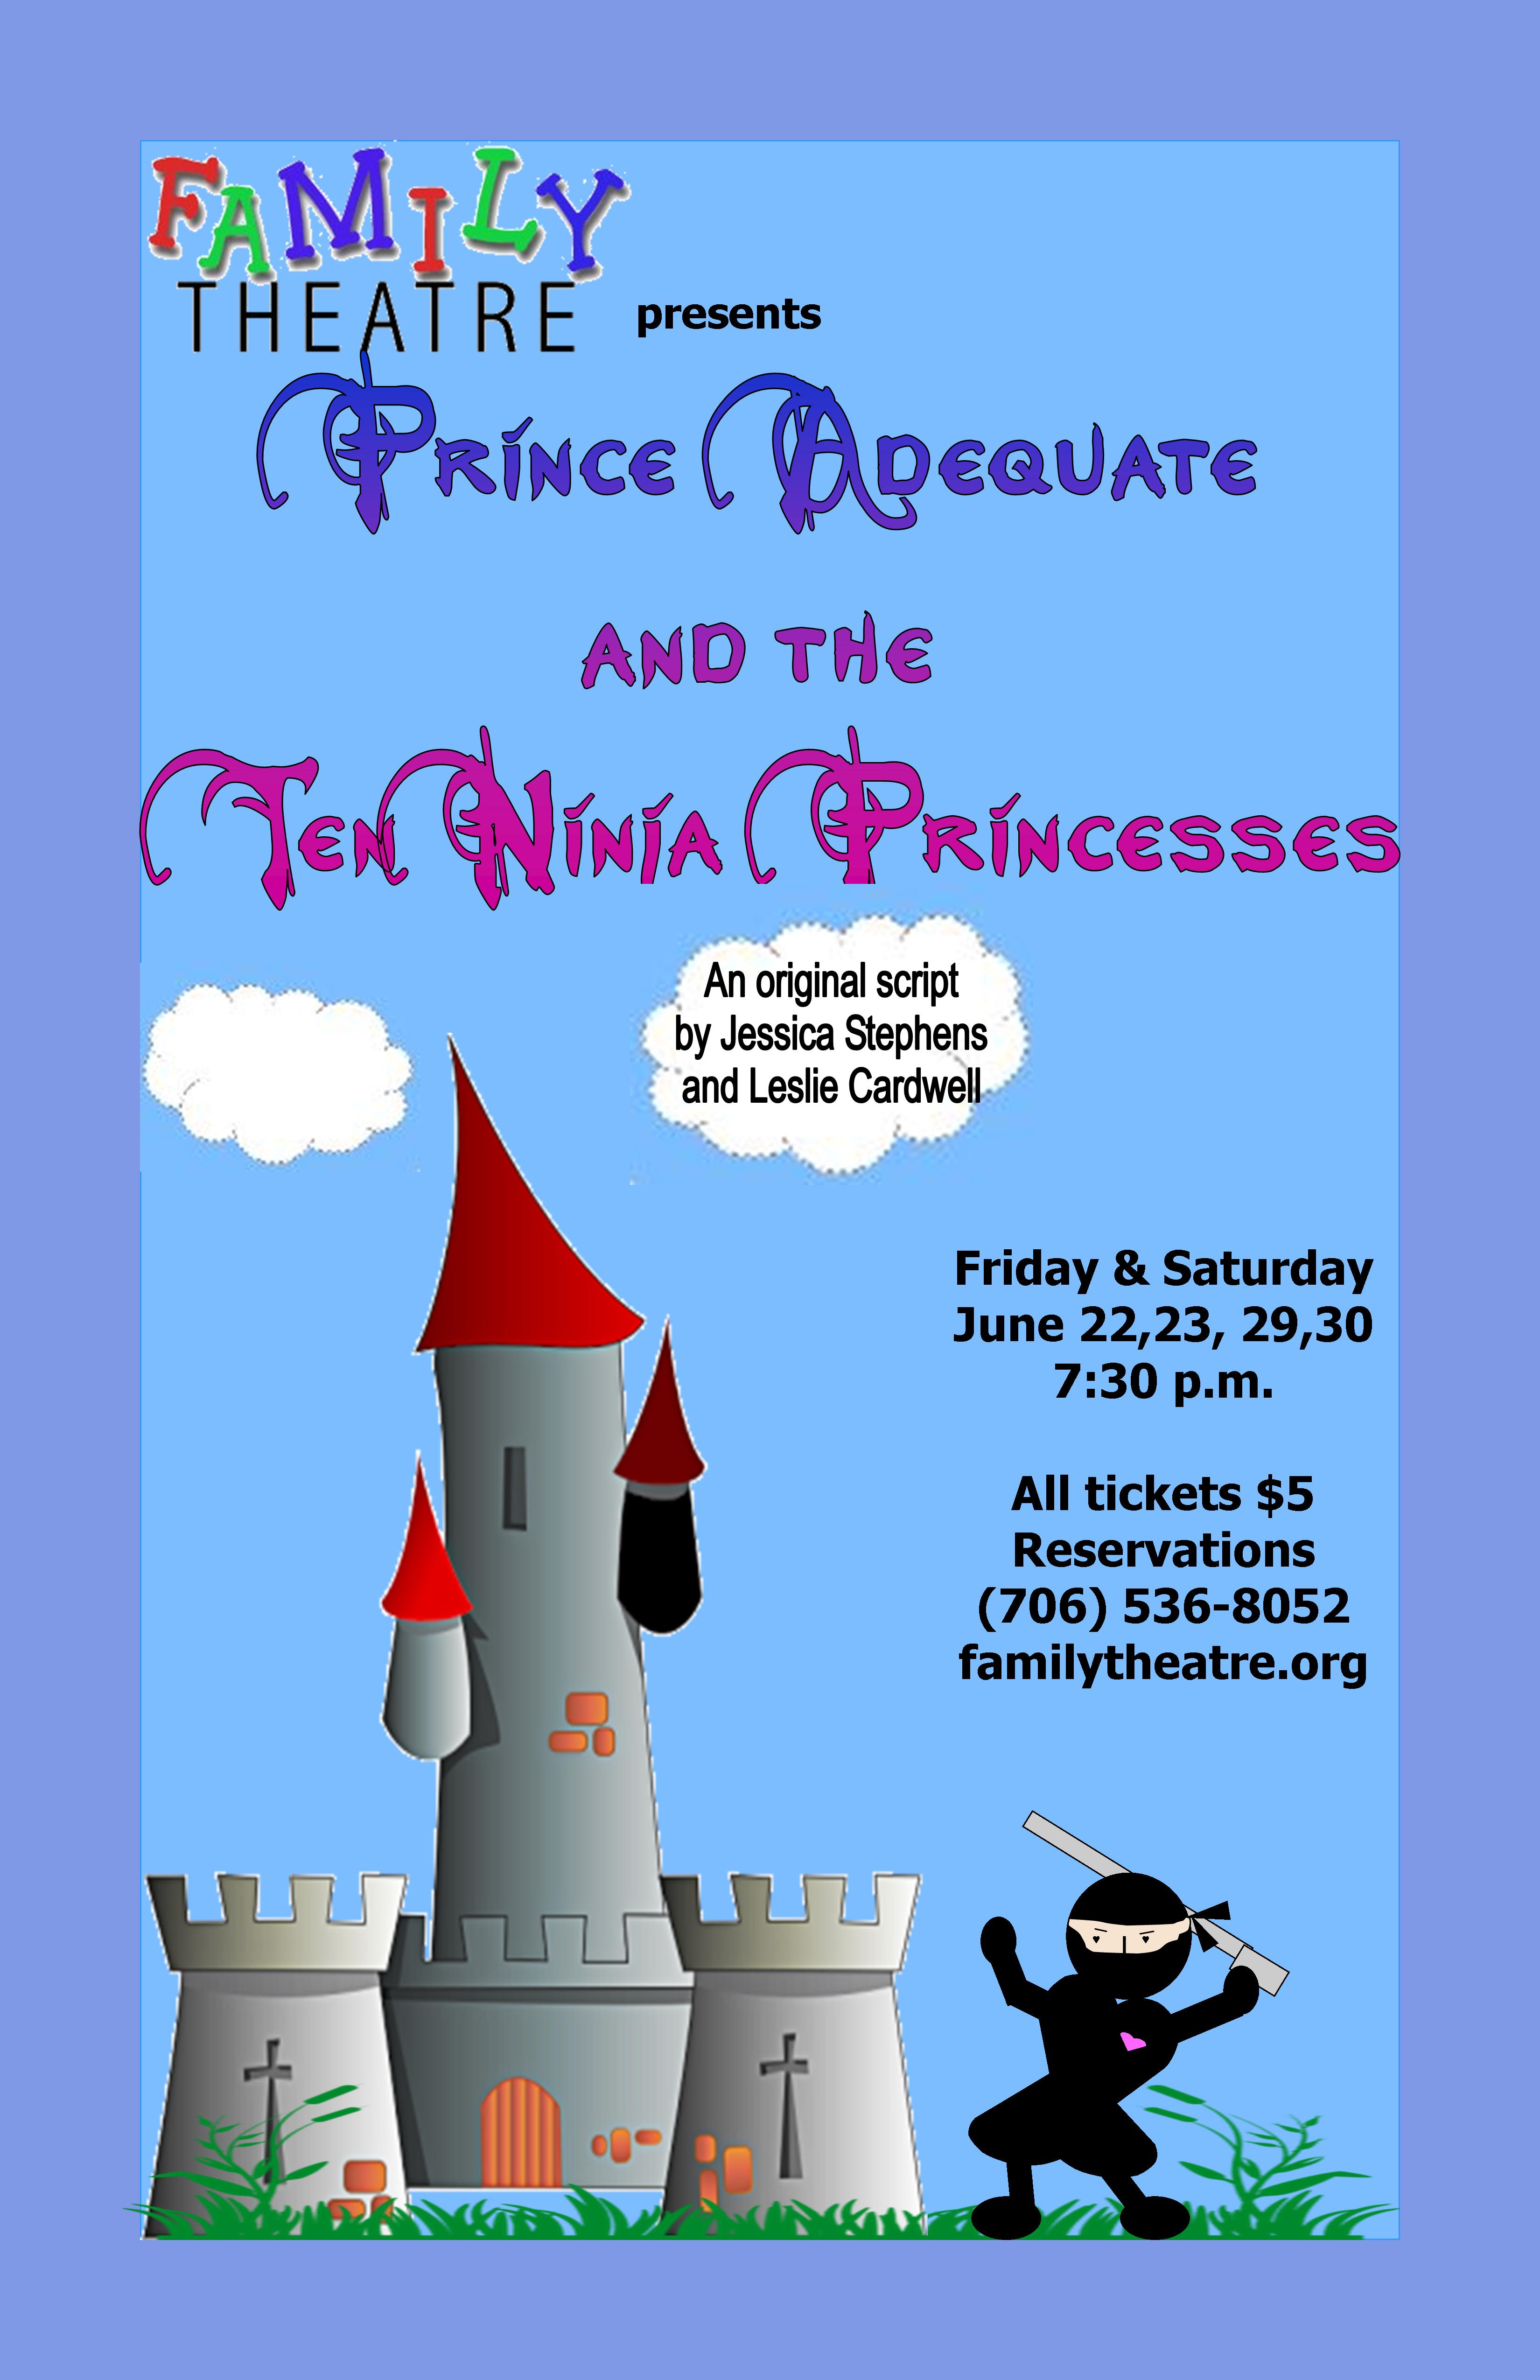 Family Theatre presents Prince Adequate and the Ten Ninja Princesses